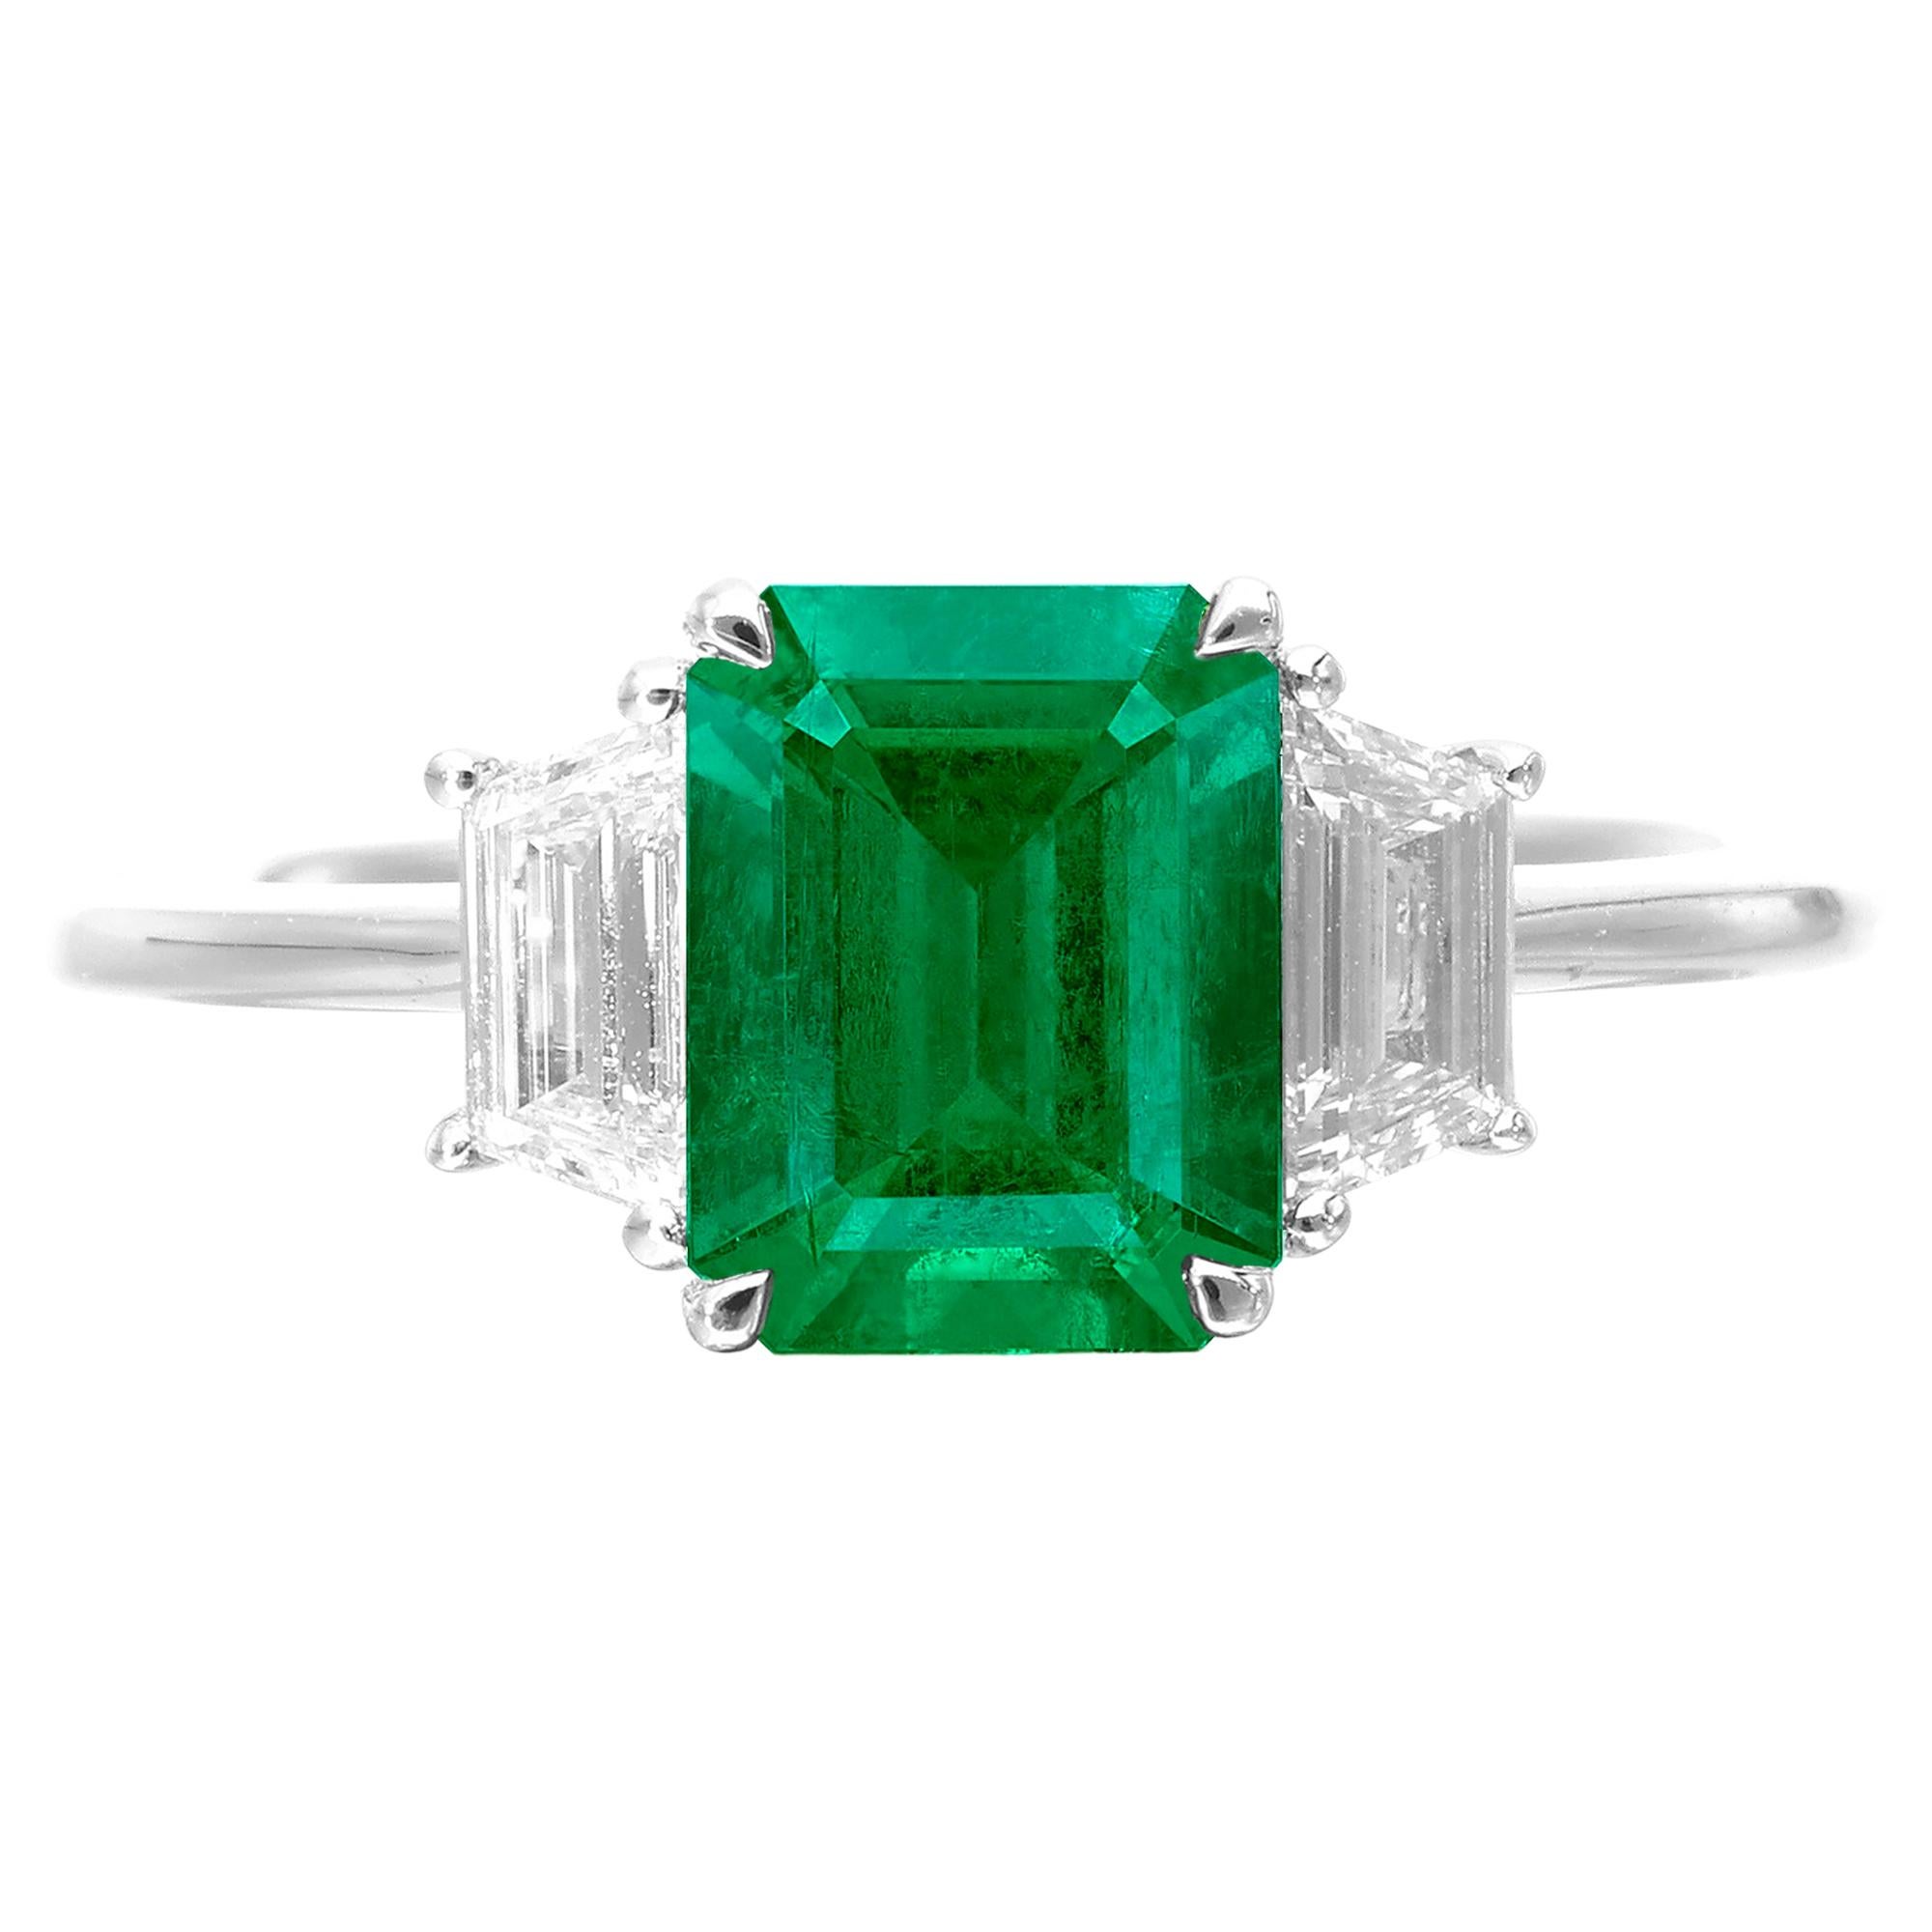 GRS Certified 6.70 Carat Green Emerald Diamond Ring
emerald side diamonds